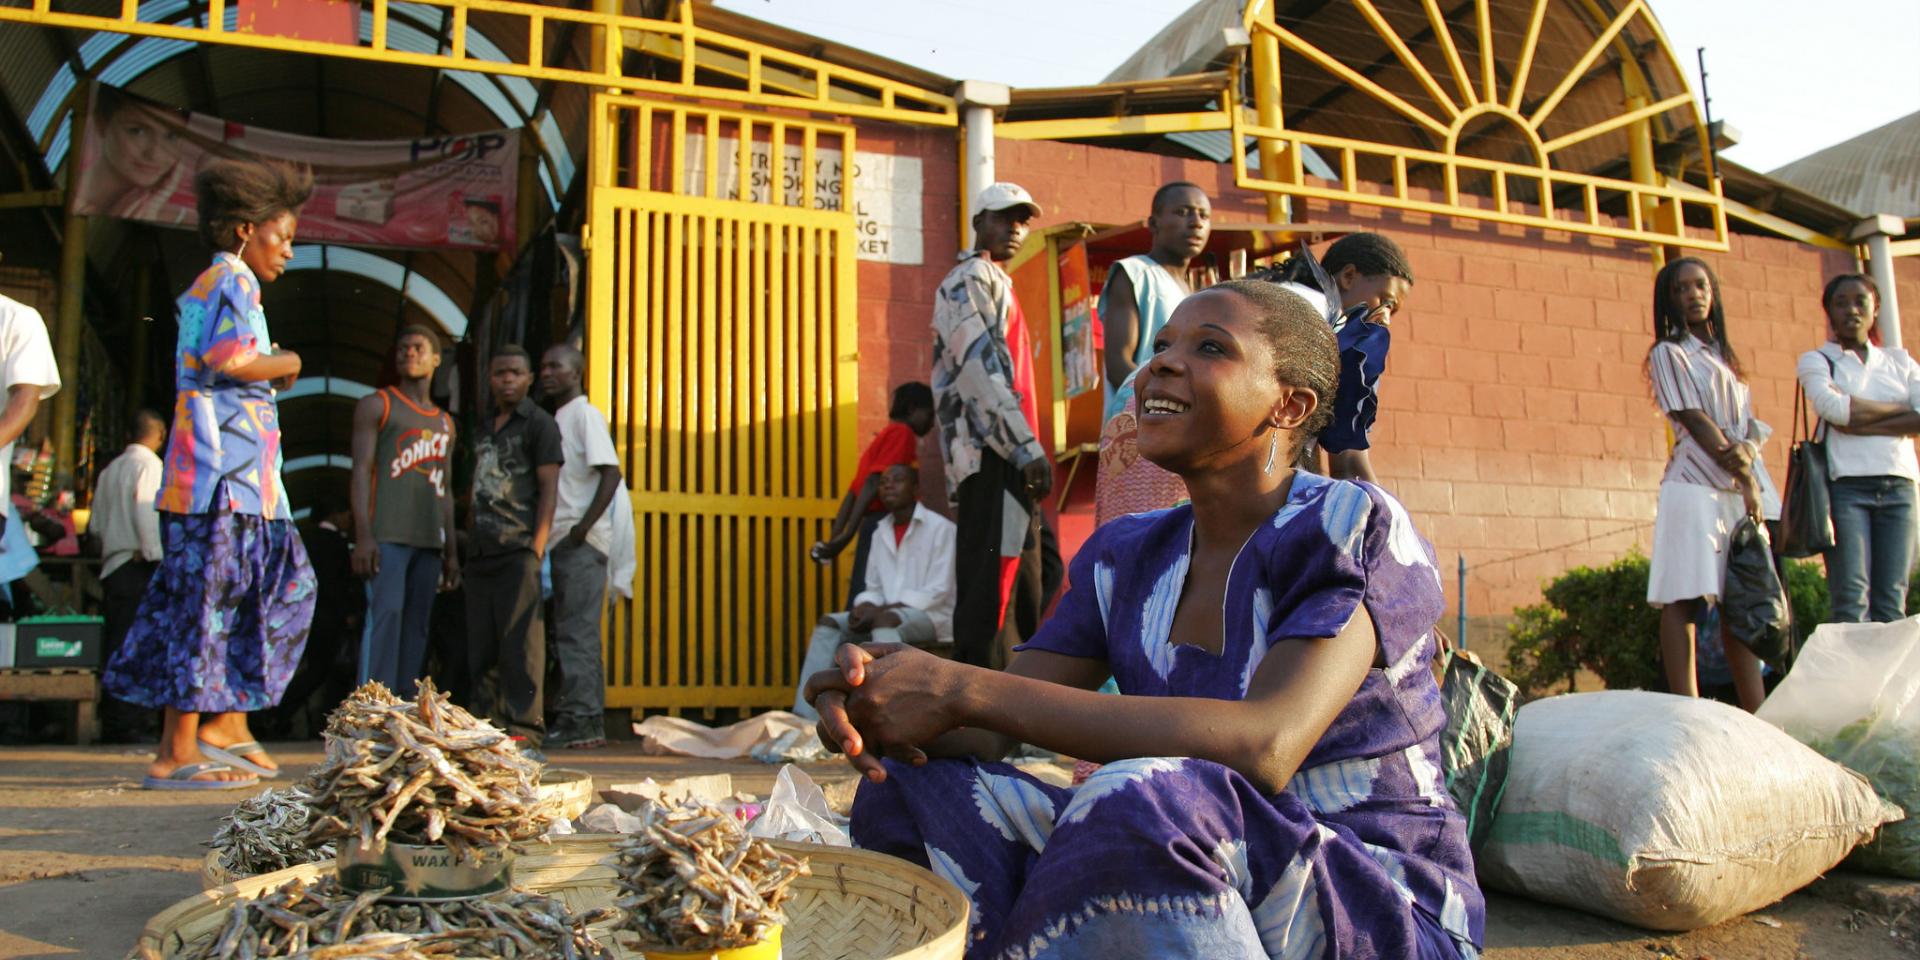 Woman selling fish in market, Zambia. Photo by Stevie Mann, 2007.